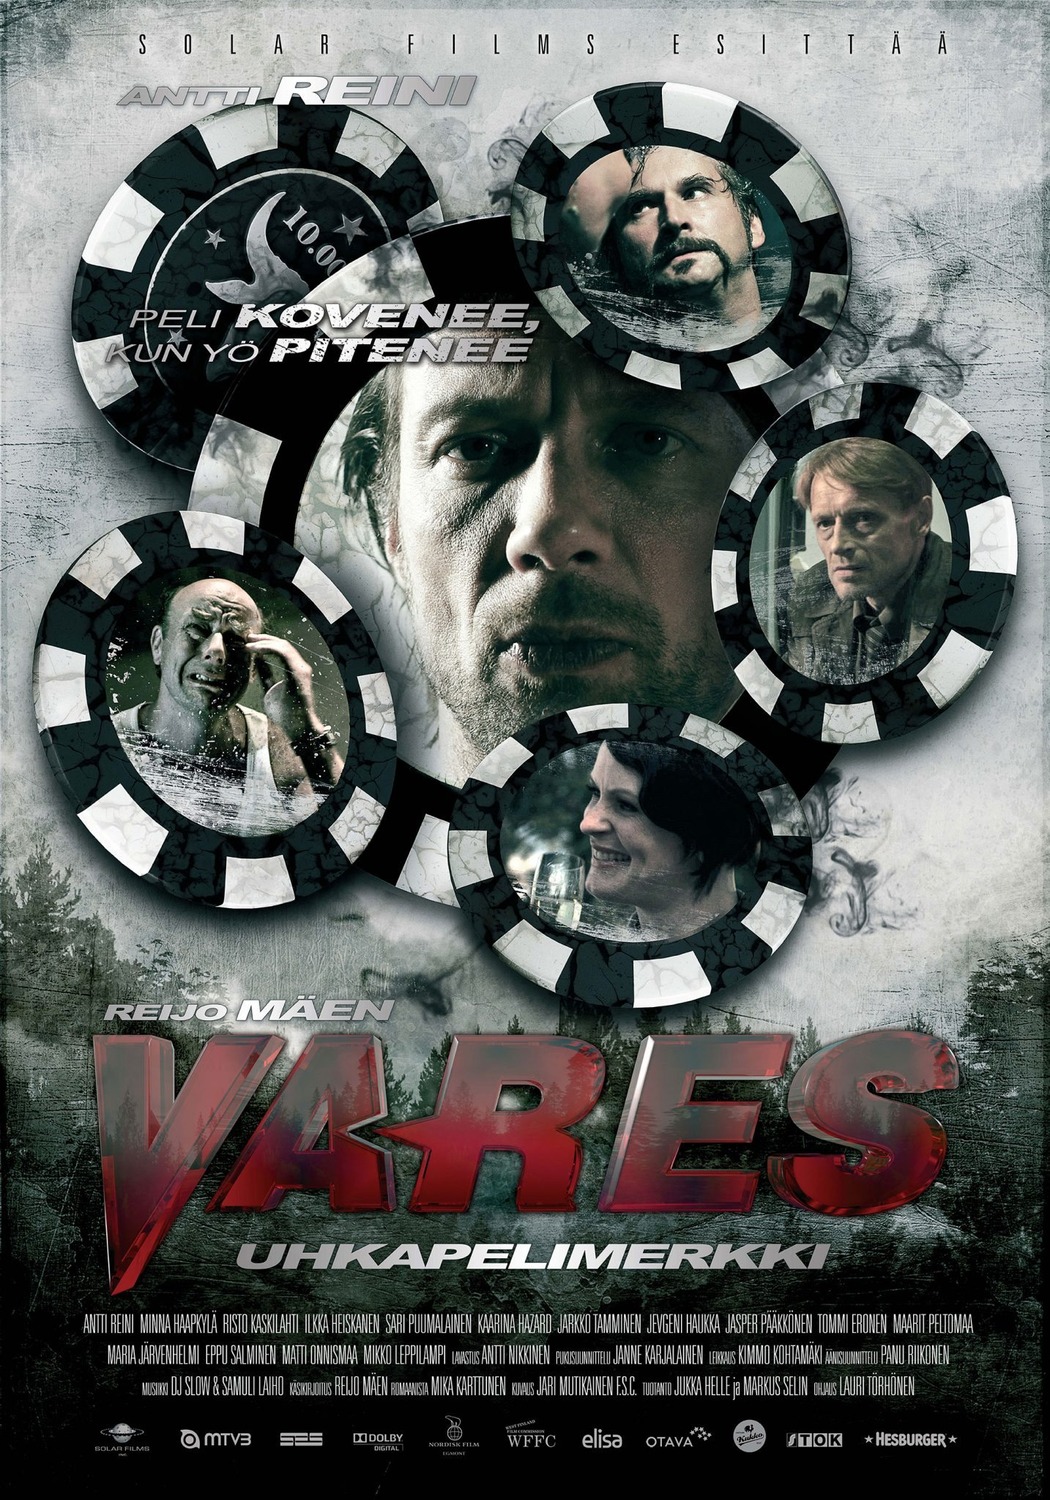 Extra Large Movie Poster Image for Vares - Uhkapelimerkki 